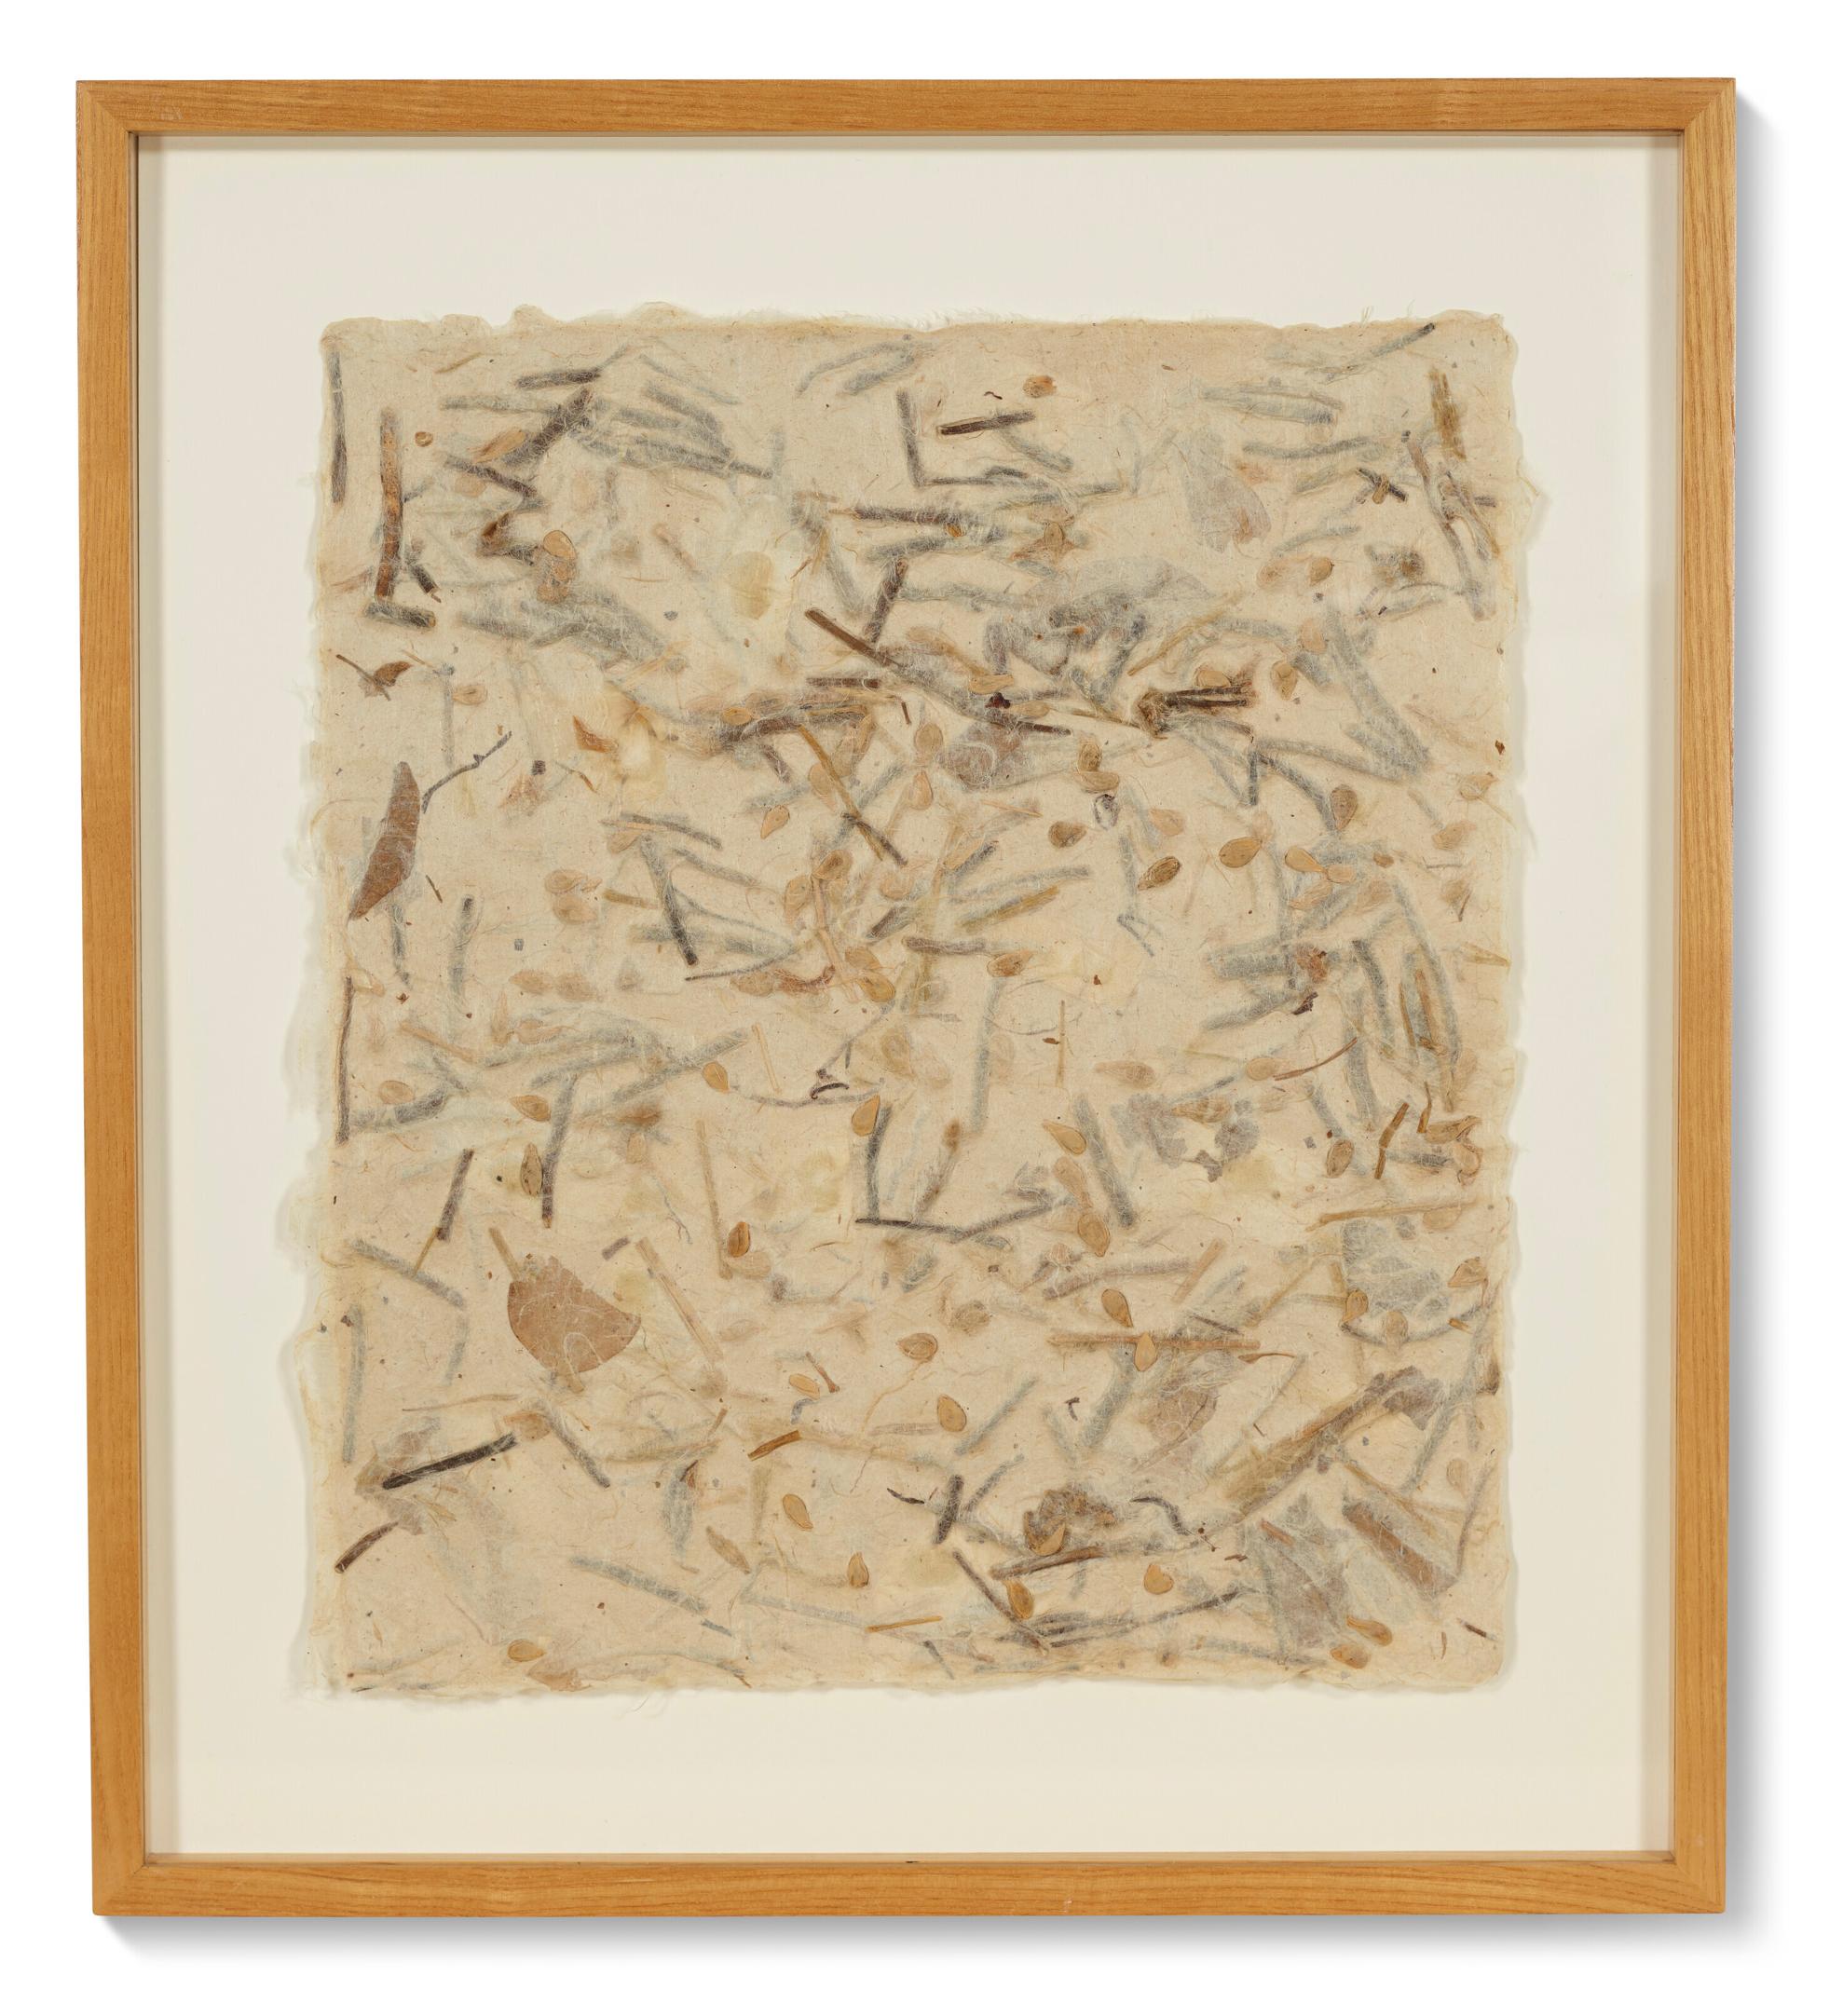 John Cage
Medicine Drawings , 1991
Handmade paper with various medicinal herbs (set of twelve)
14 x 12 in  (35.6 x 30.5 cm) each